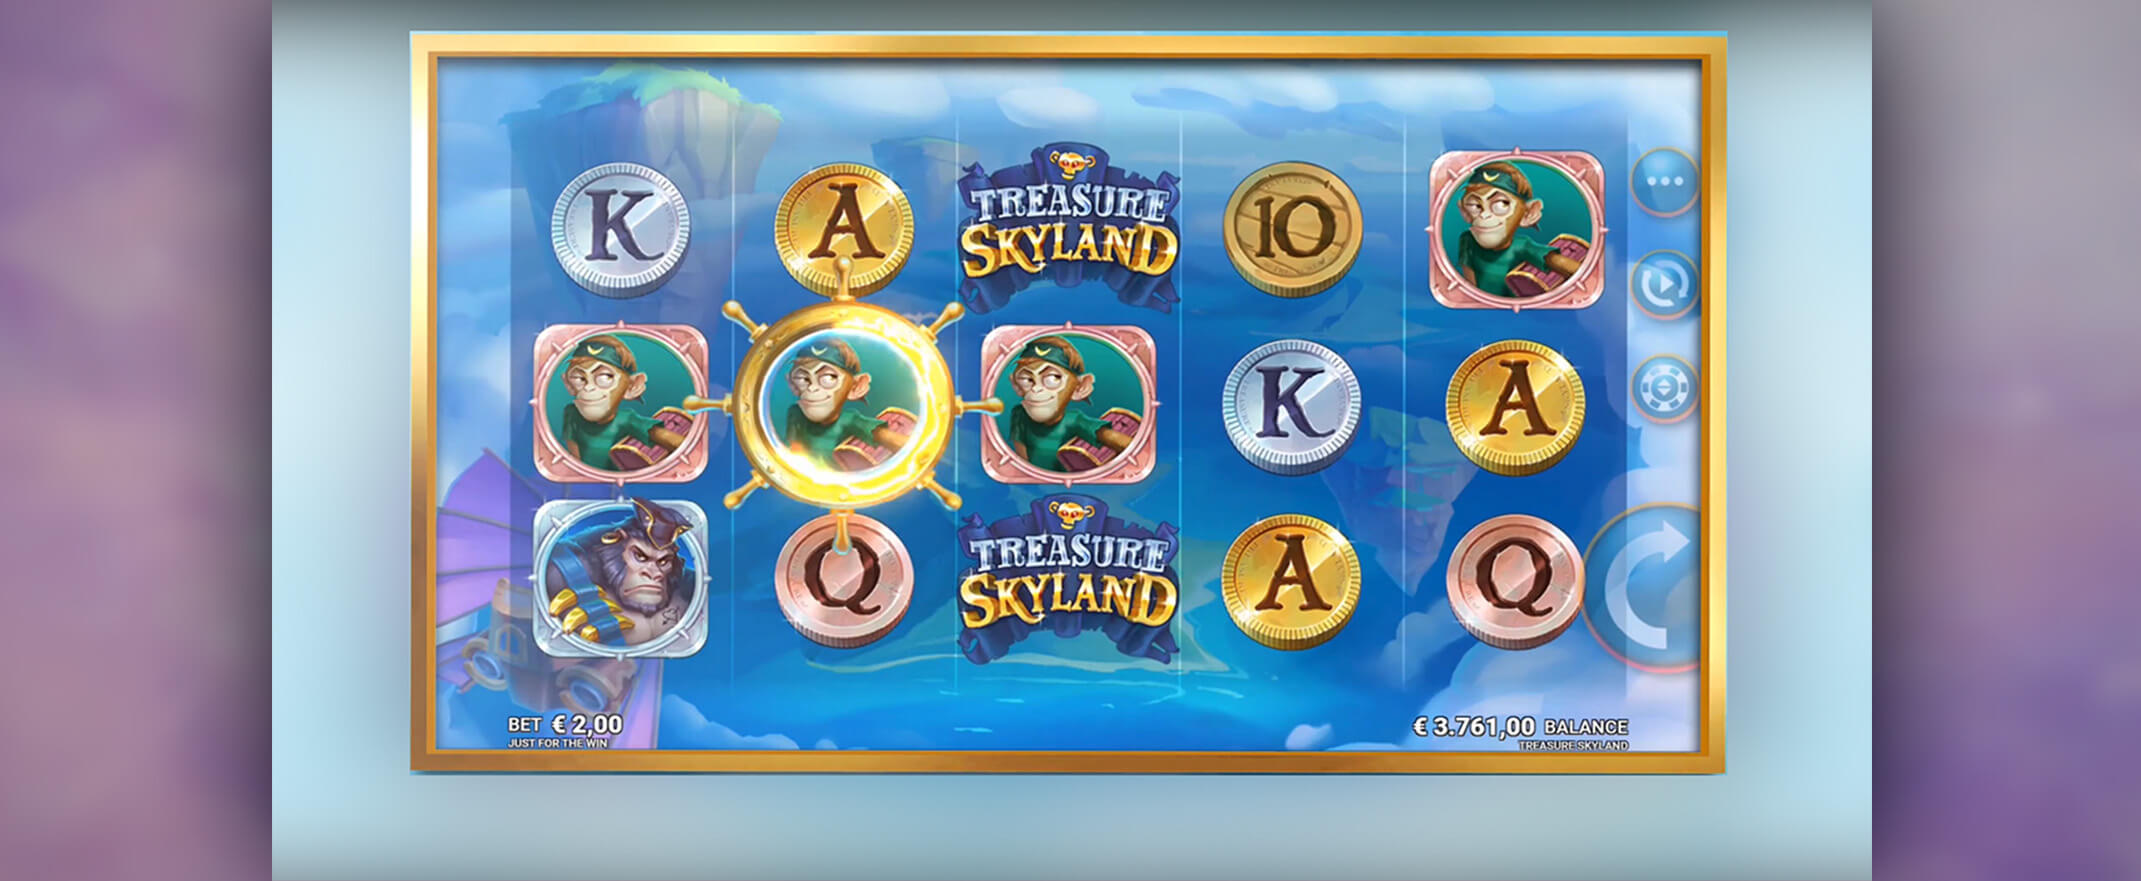 Treasure Skyland Spielautomat spielen